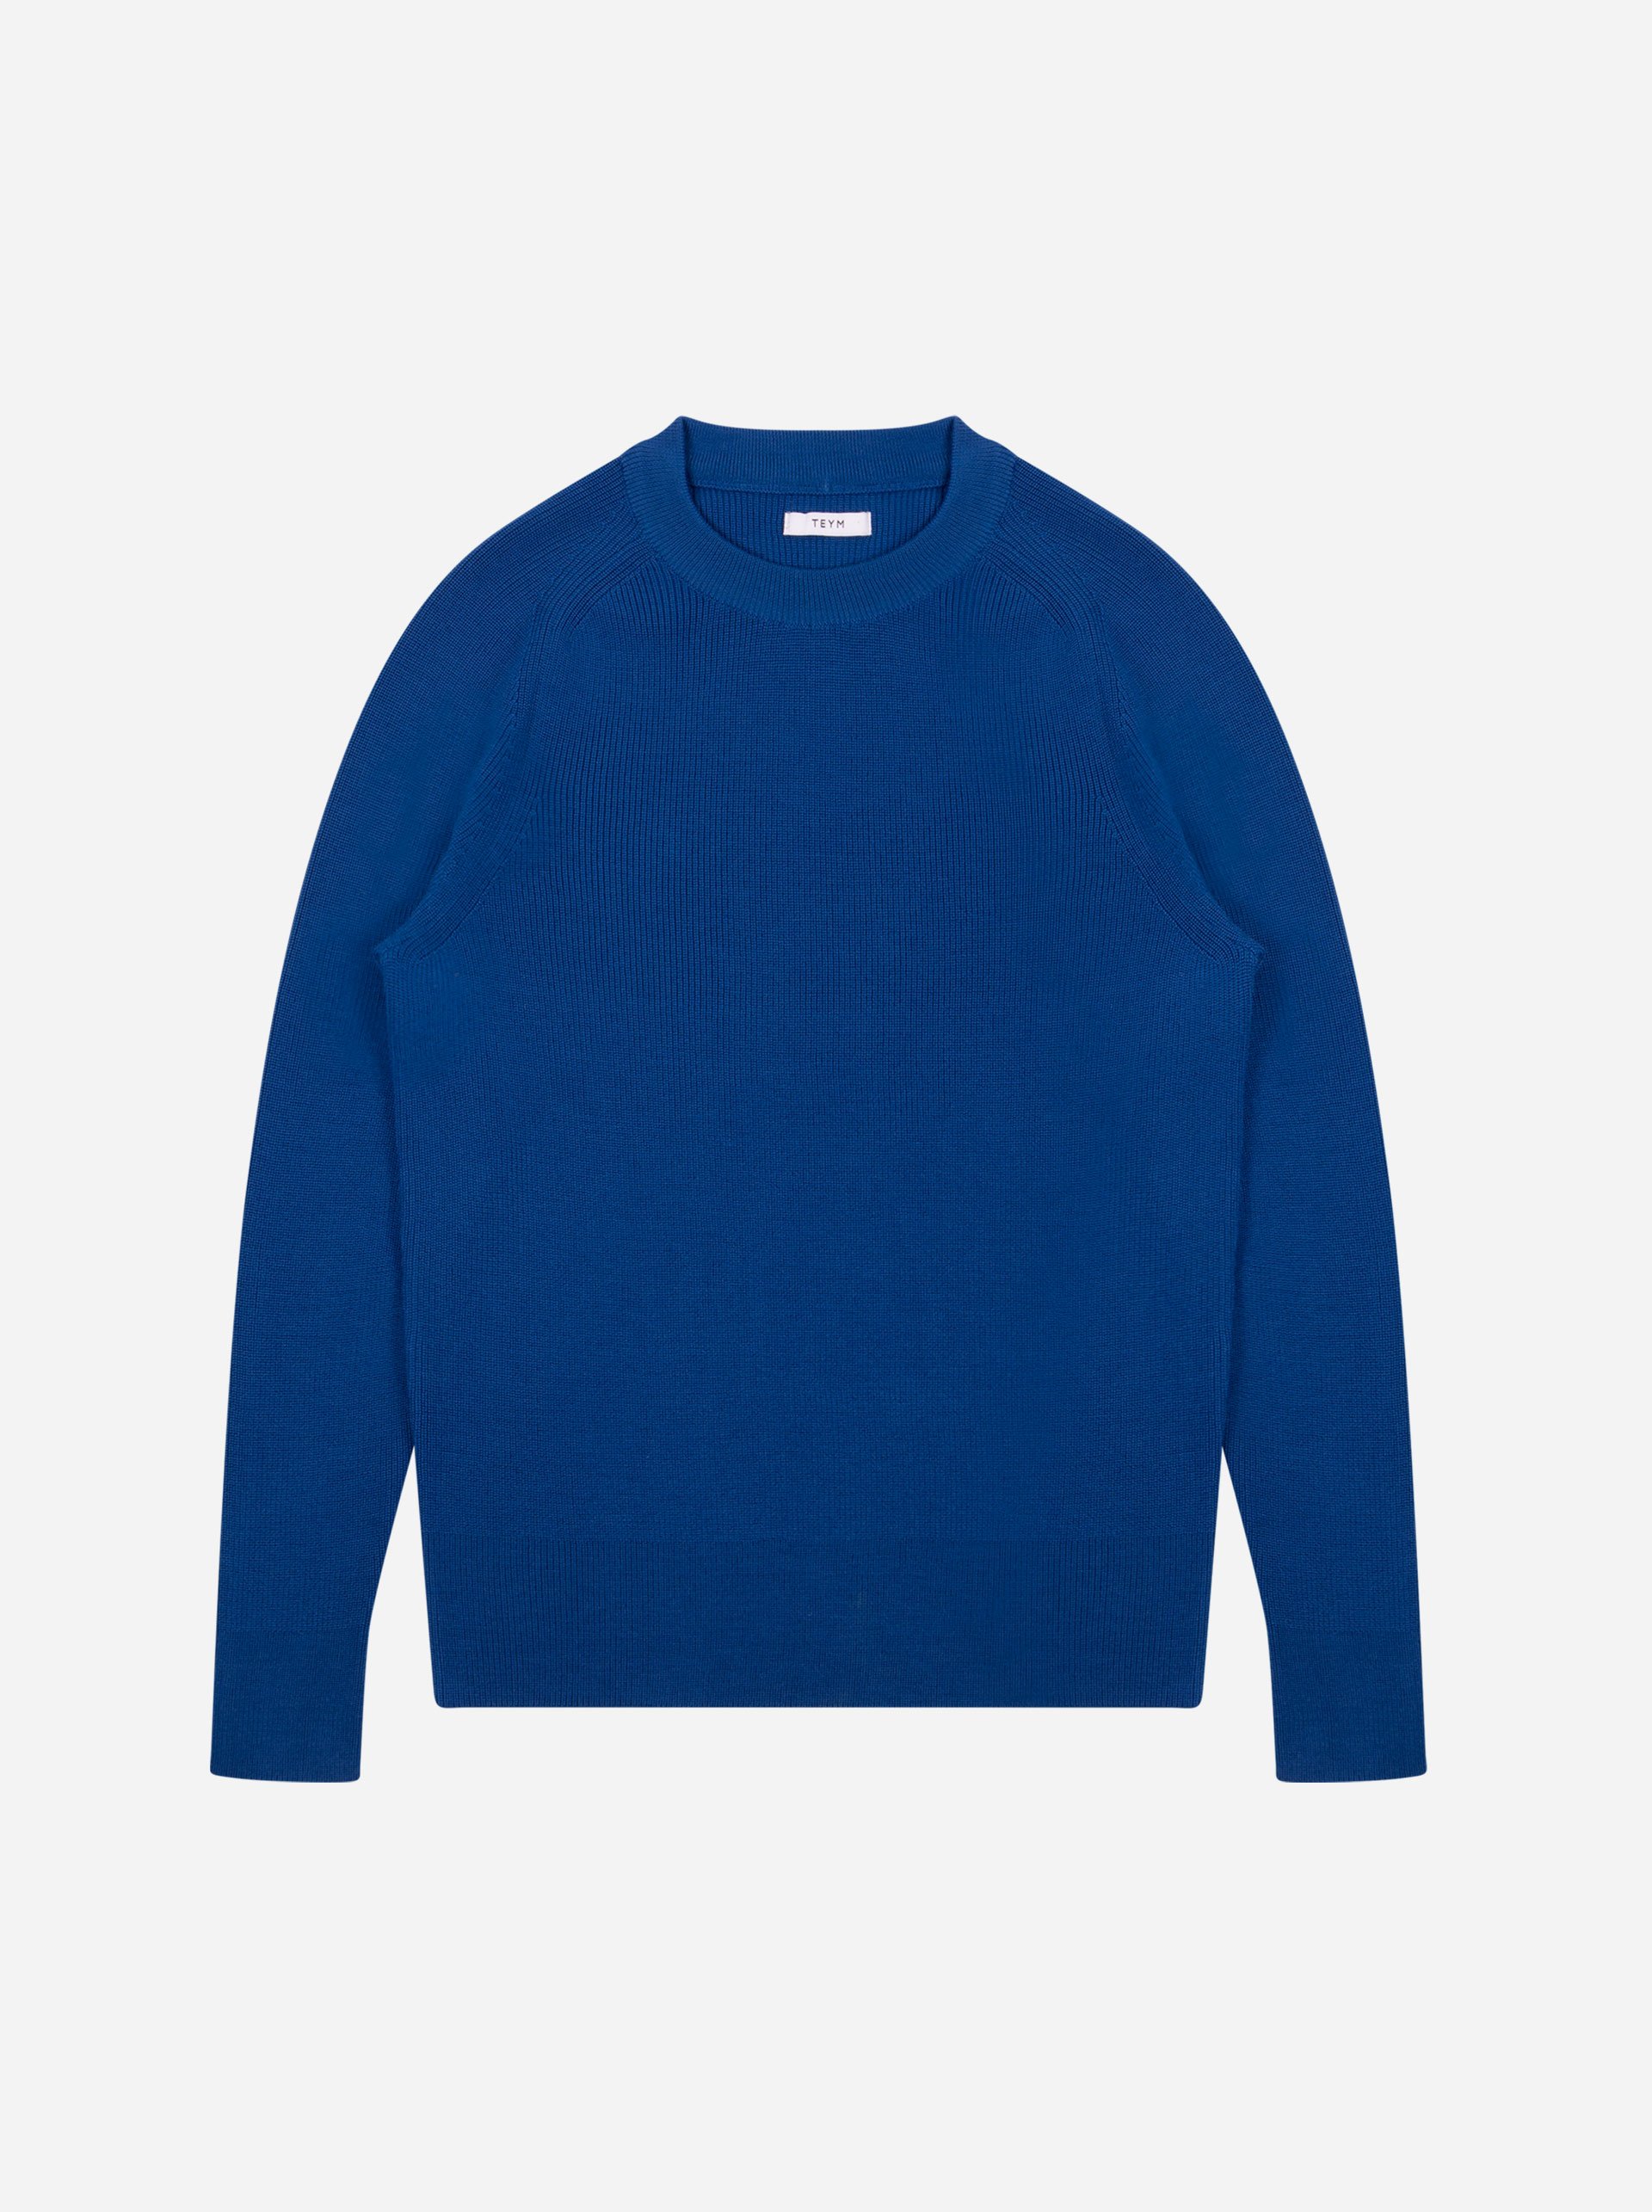 Teym - Crewneck - The Merino Sweater - Women - Cobalt Blue - 5